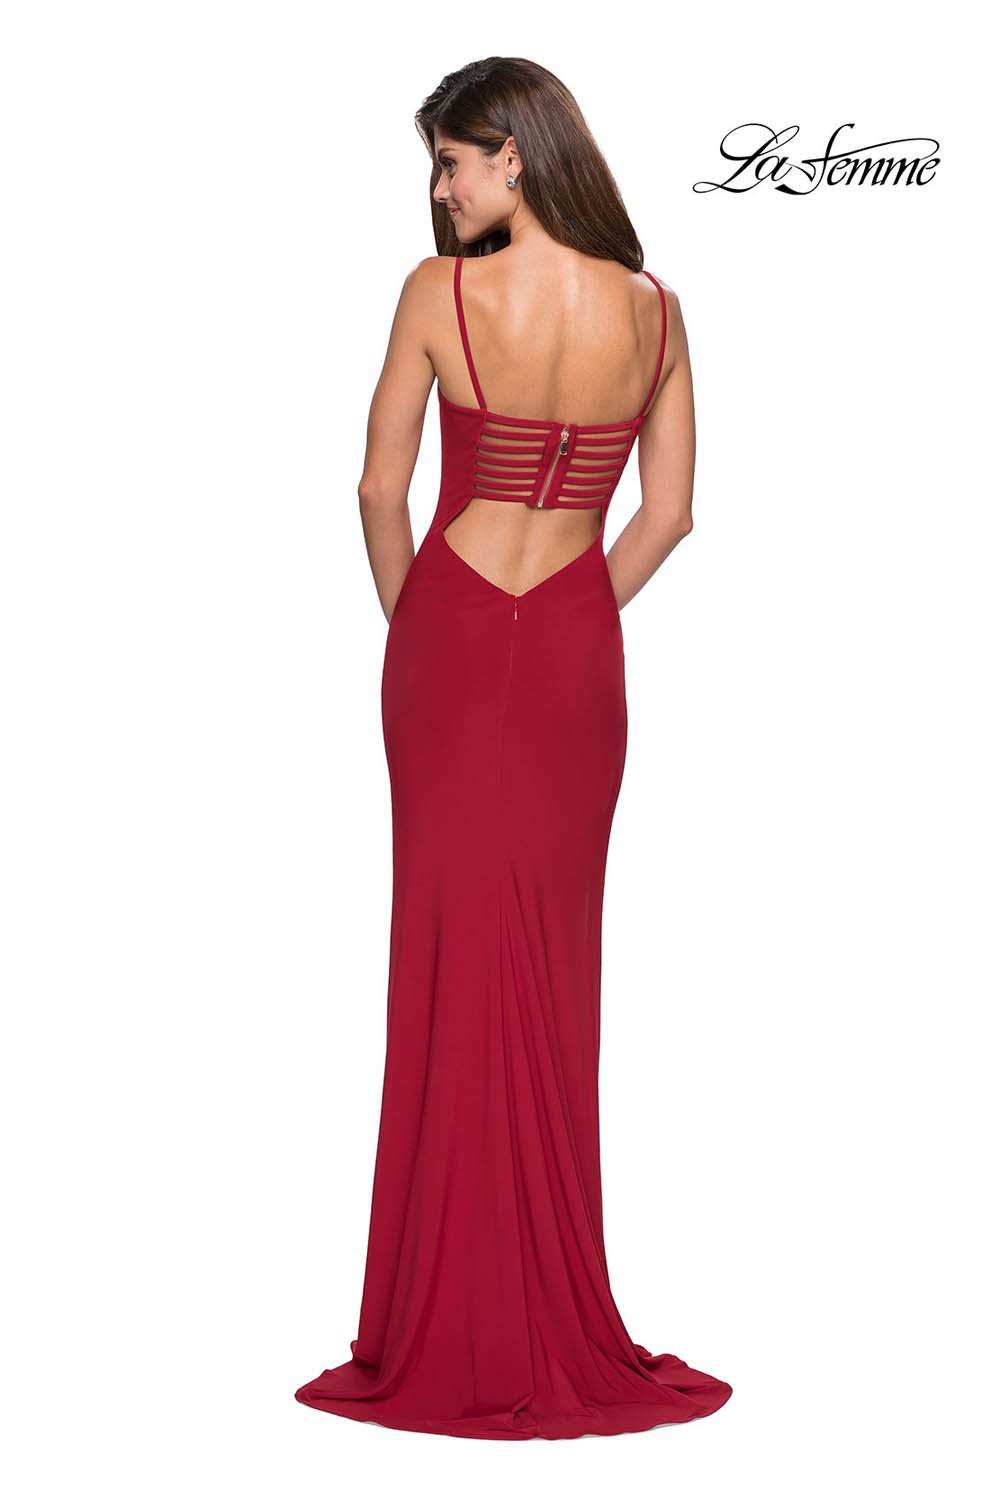 La Femme 27469 dress images in these colors: Black, Deep Red, Royal Blue.